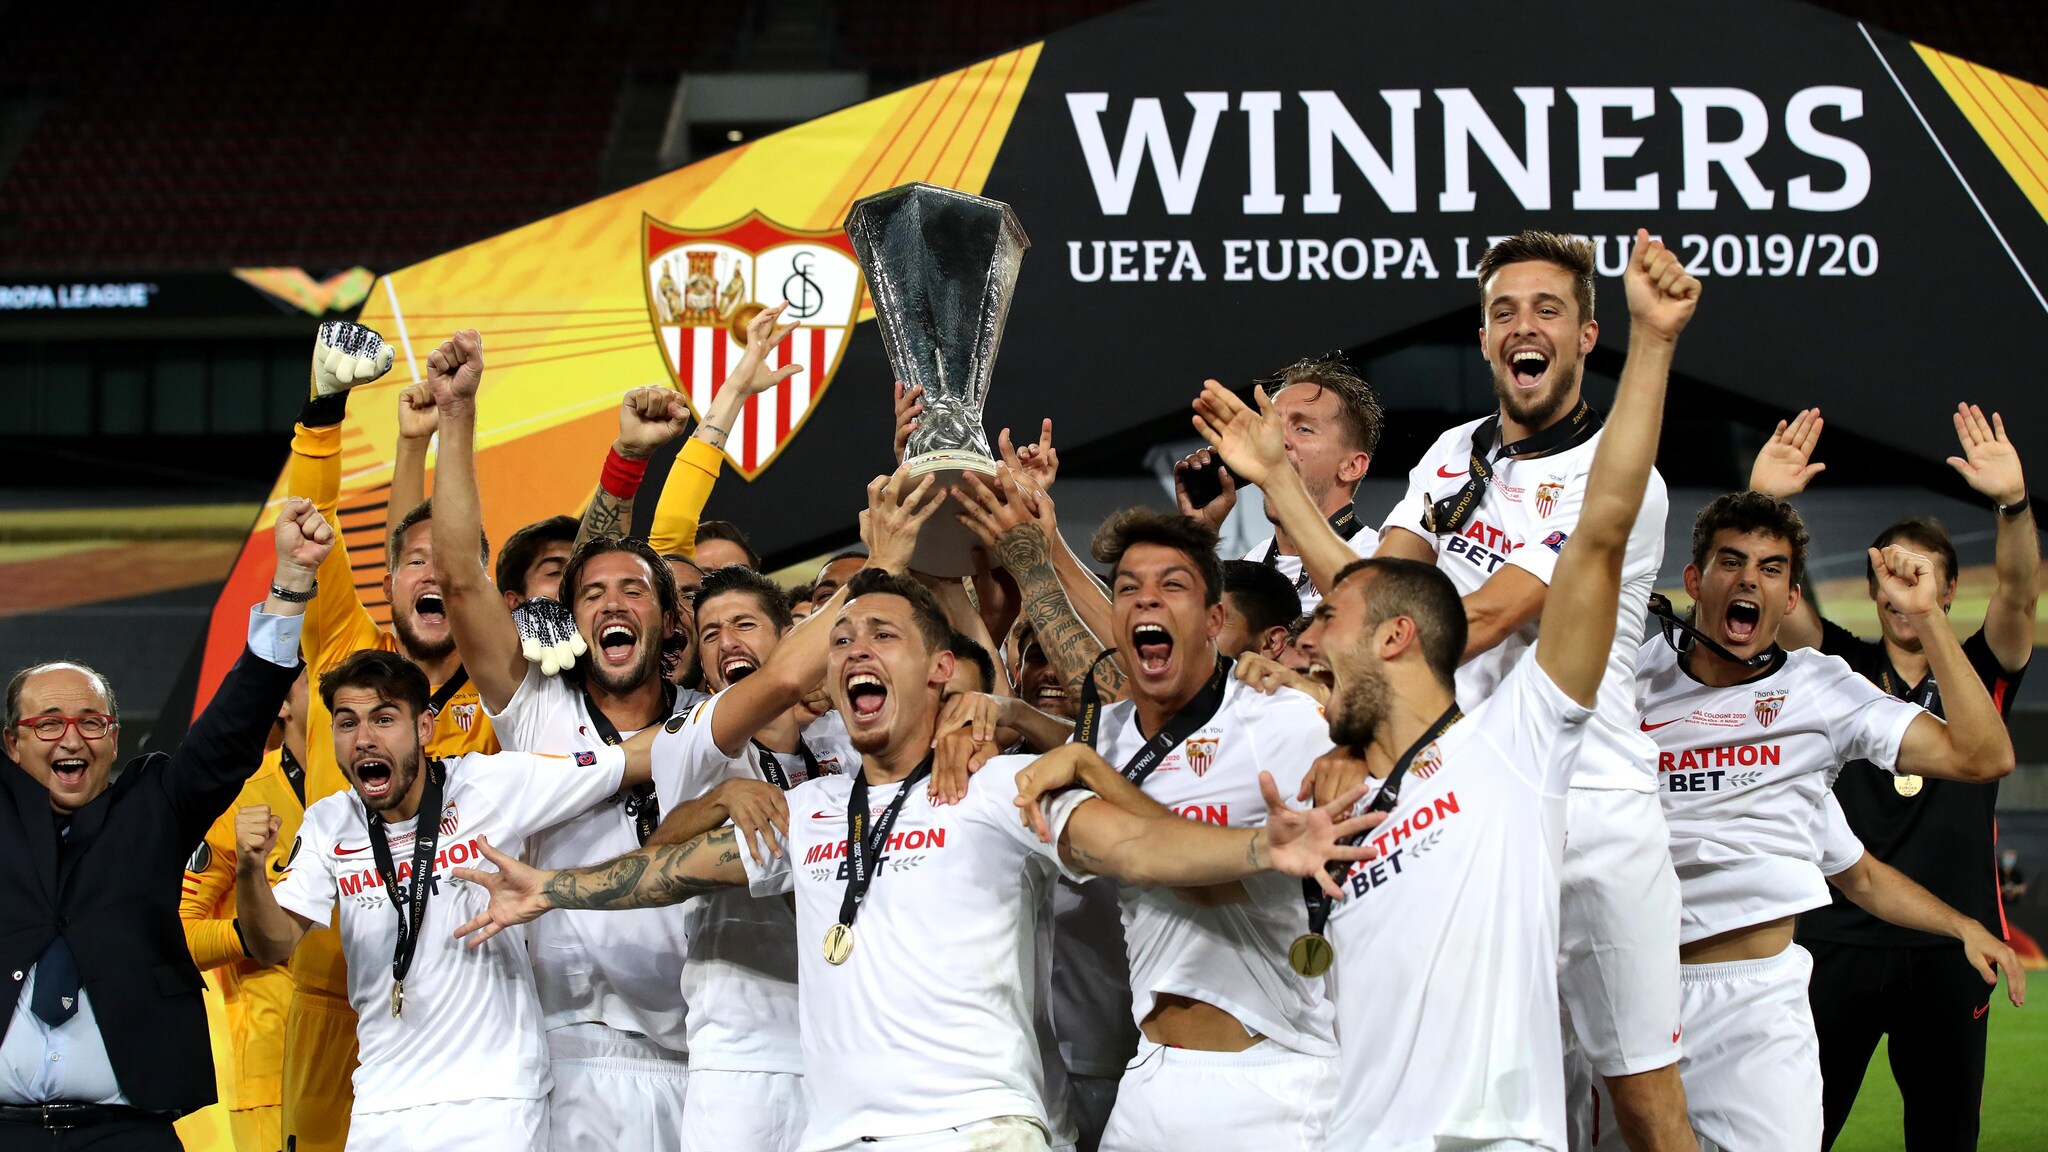 2020 UEFA Cup and Europa League winners Sevilla. UEFA Europa League winners Sevilla 2016. UEFA Europa League winners Sevilla 2019-20. 2014 UEFA Cup and Europa League winners Sevilla.